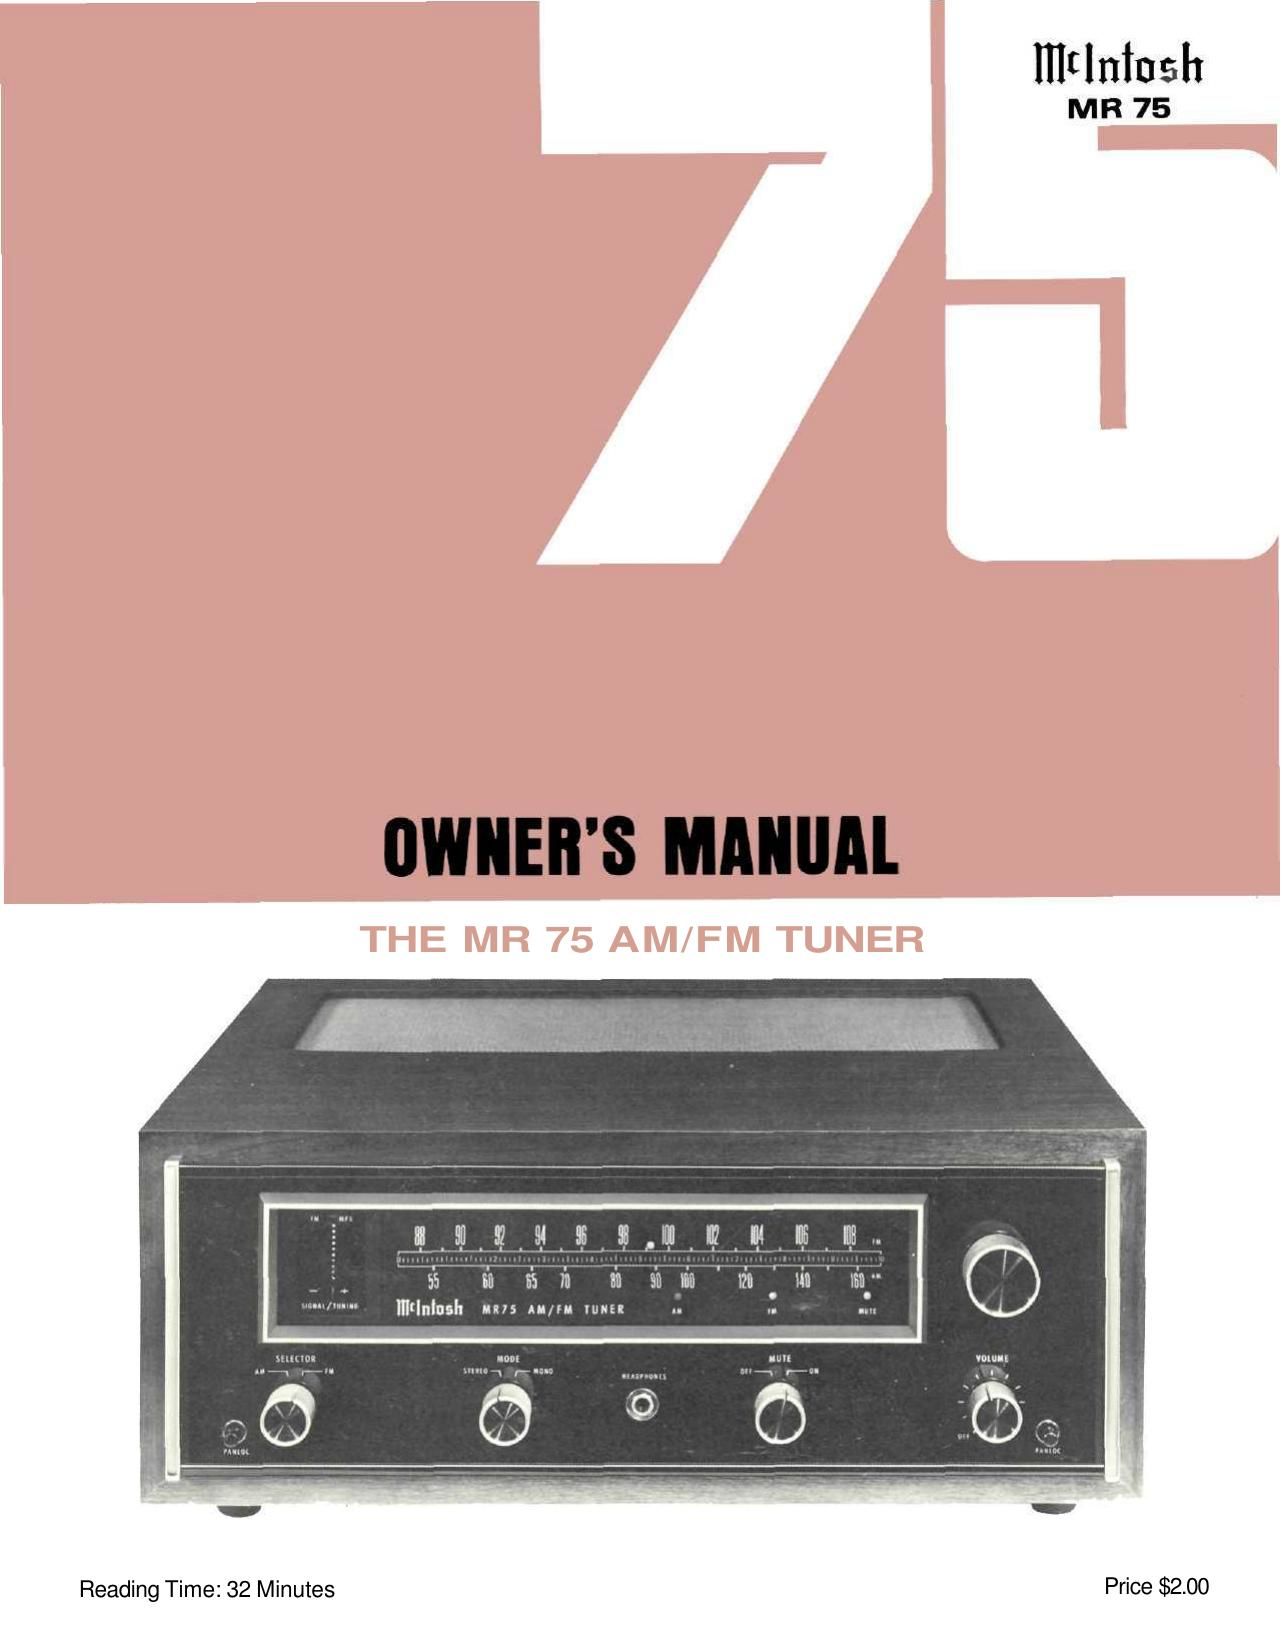 McIntosh MR 75 Owners Manual